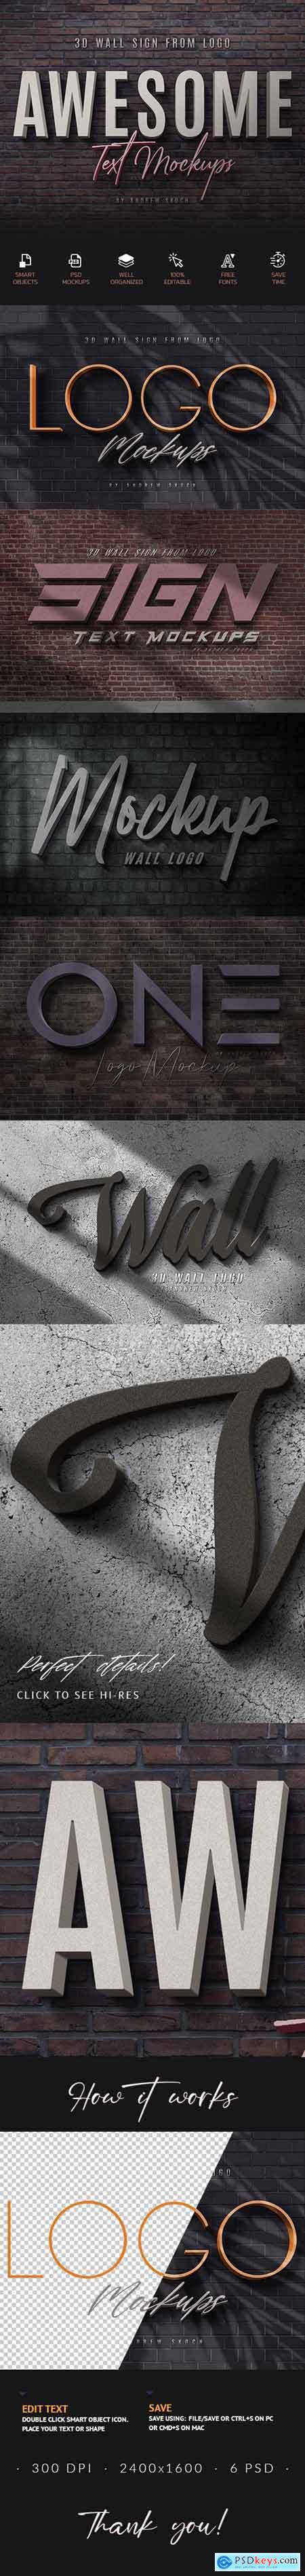 3D Wall Logo Creator 30352685